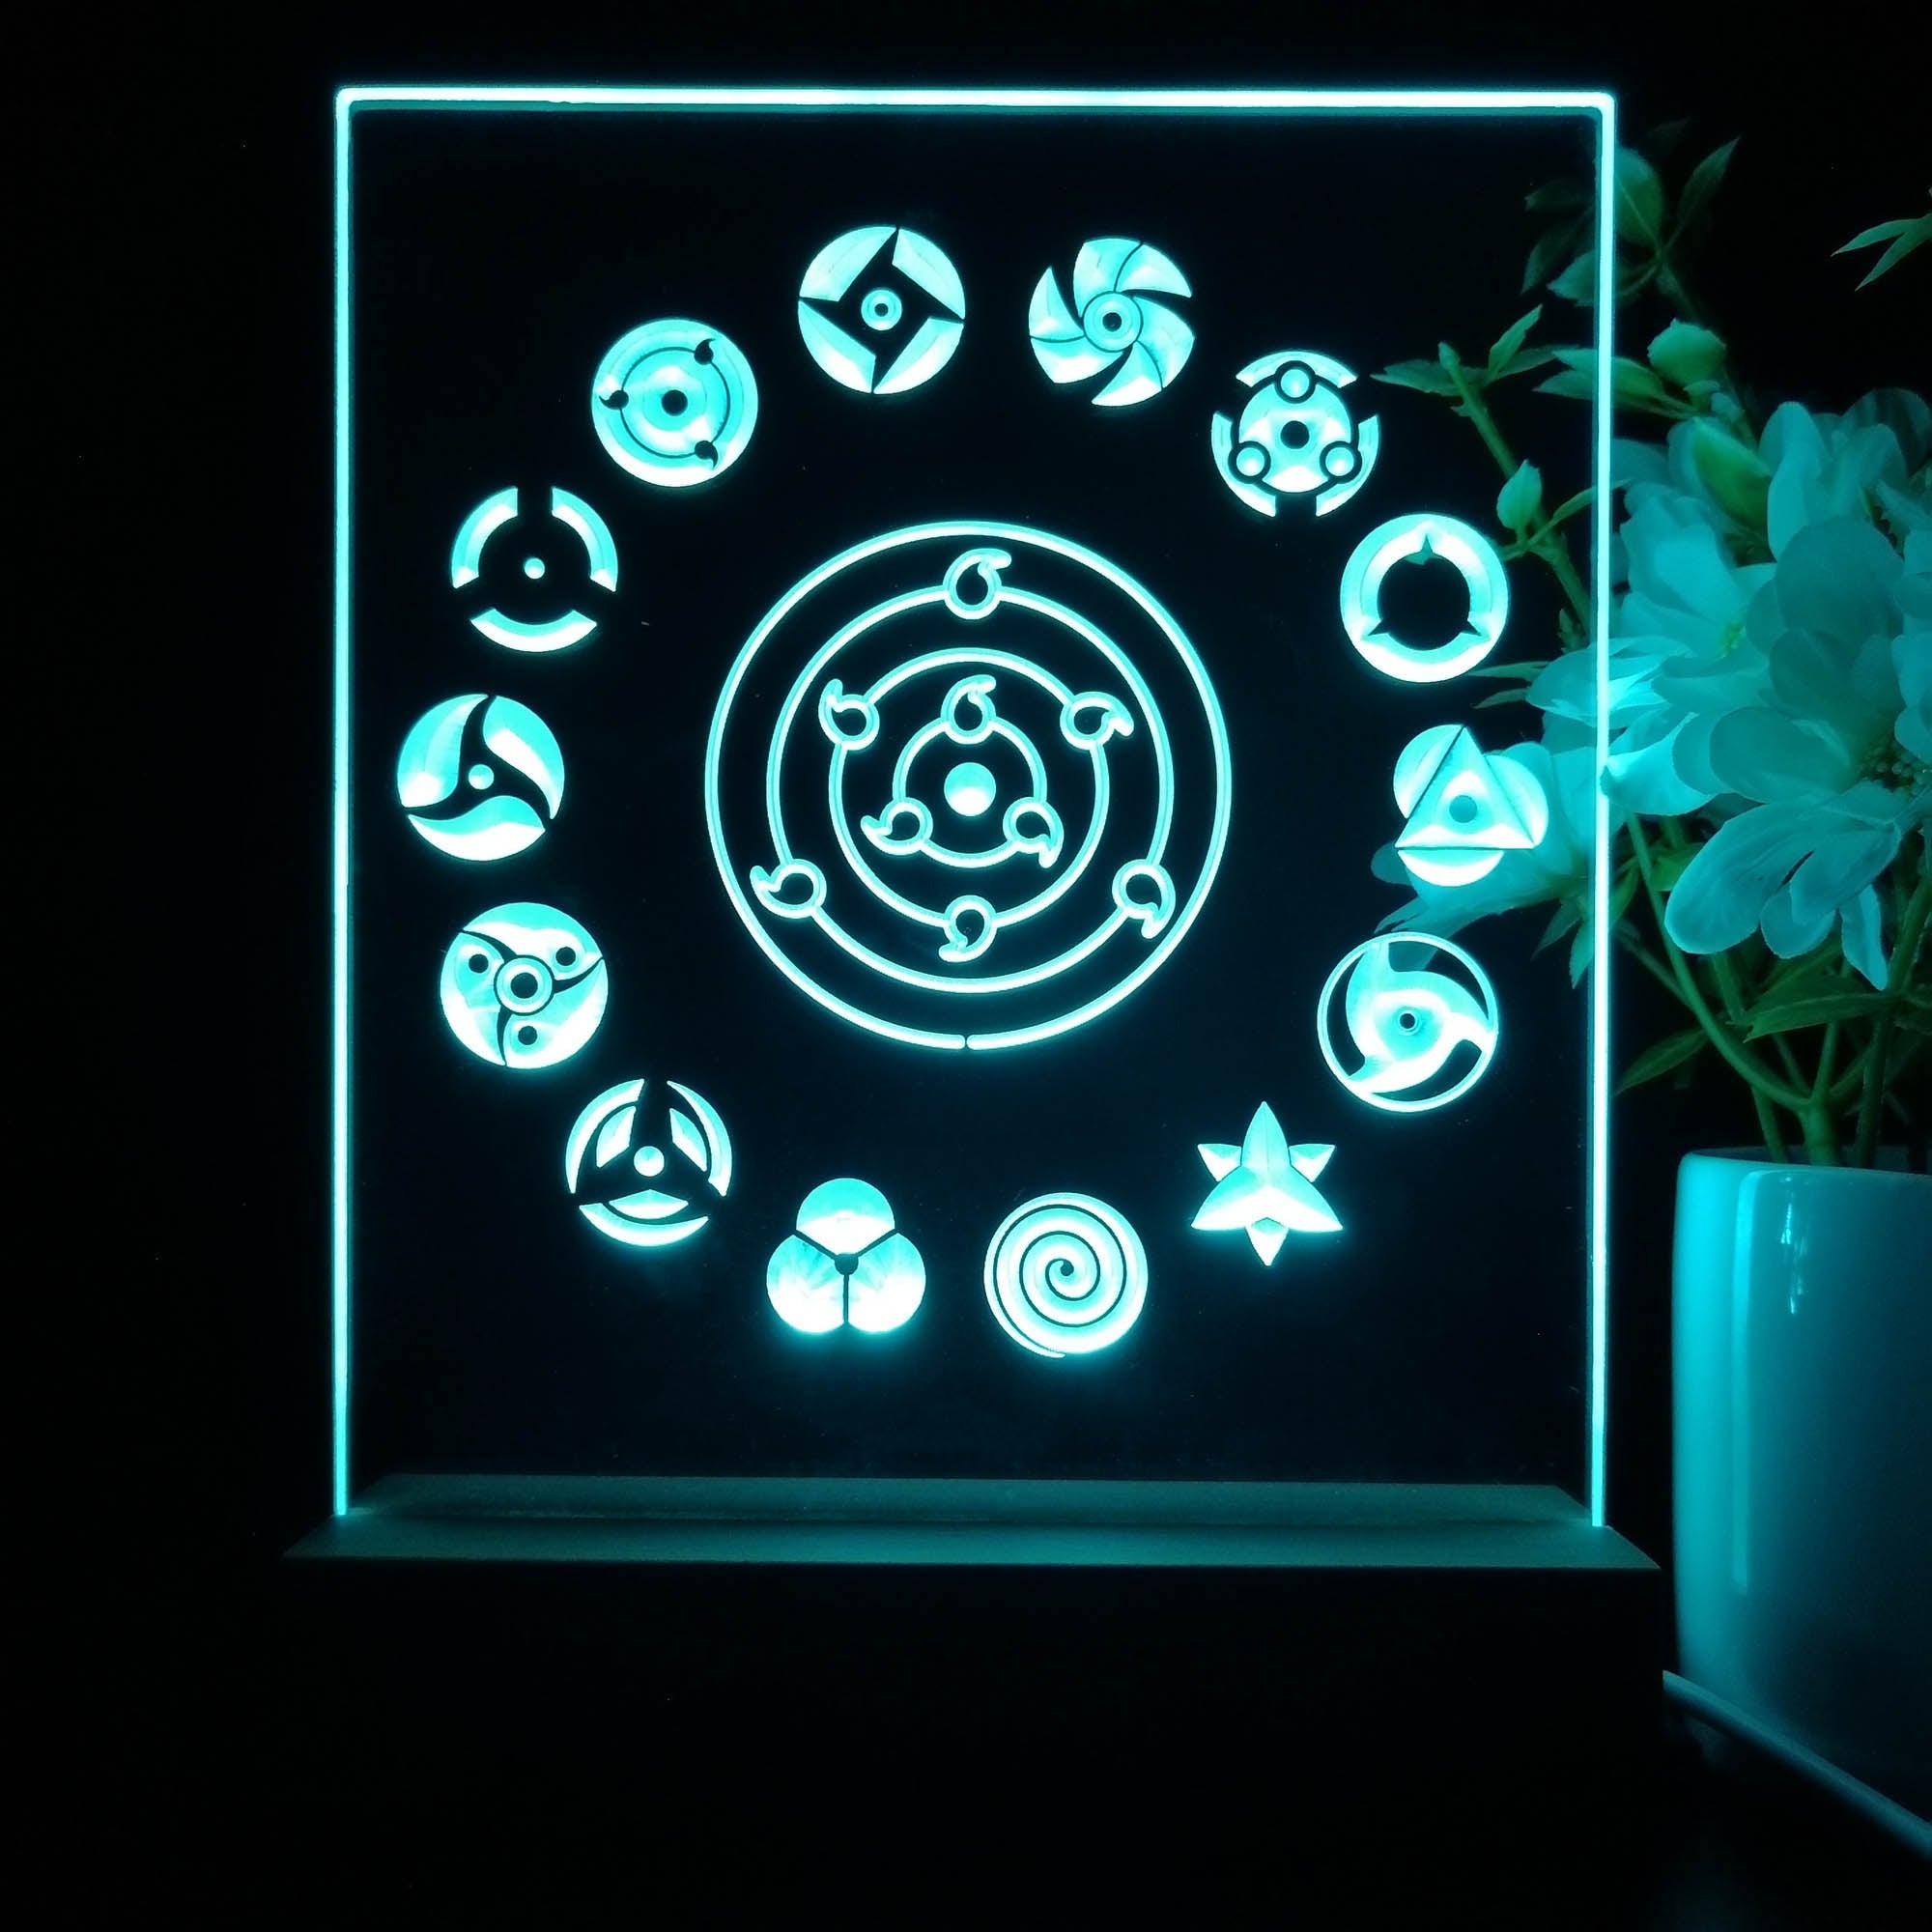 Sharingan Game Room LED Sign Lamp Display